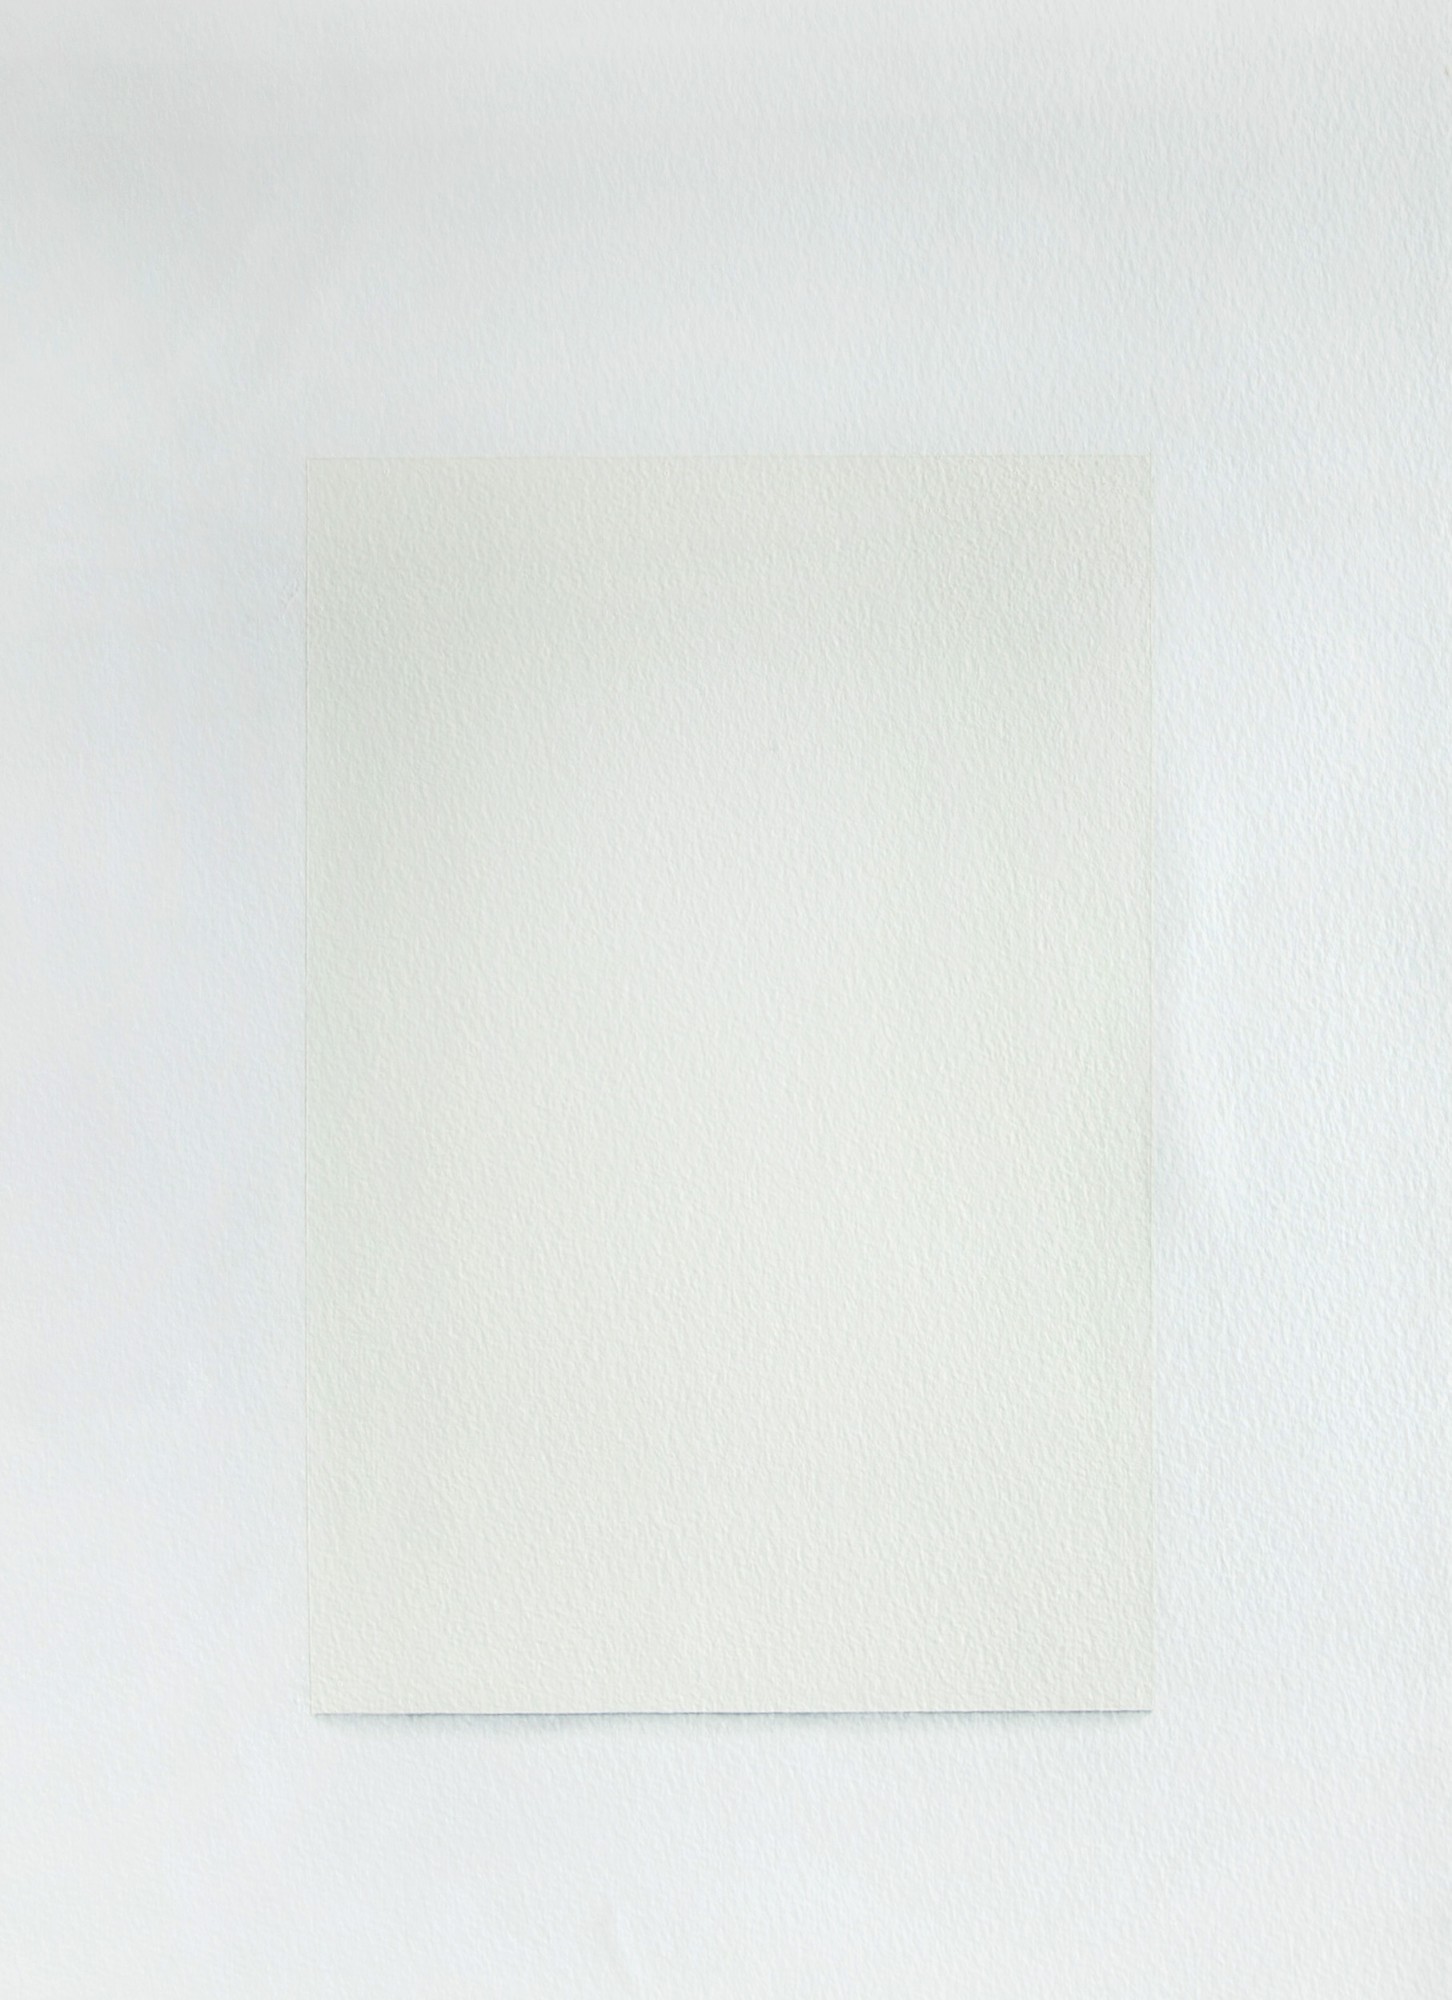 Mauro Piva - Auto-Retrato em Branco - Papel em Branco III